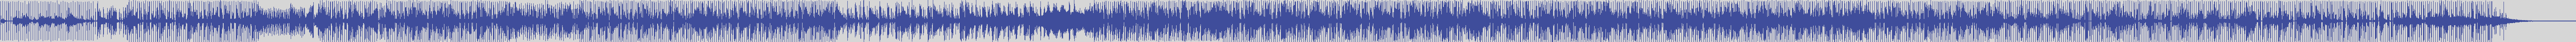 atomic_recordings [AR019] Sonothèque - Beautiful Morning [Original Mix] audio wave form